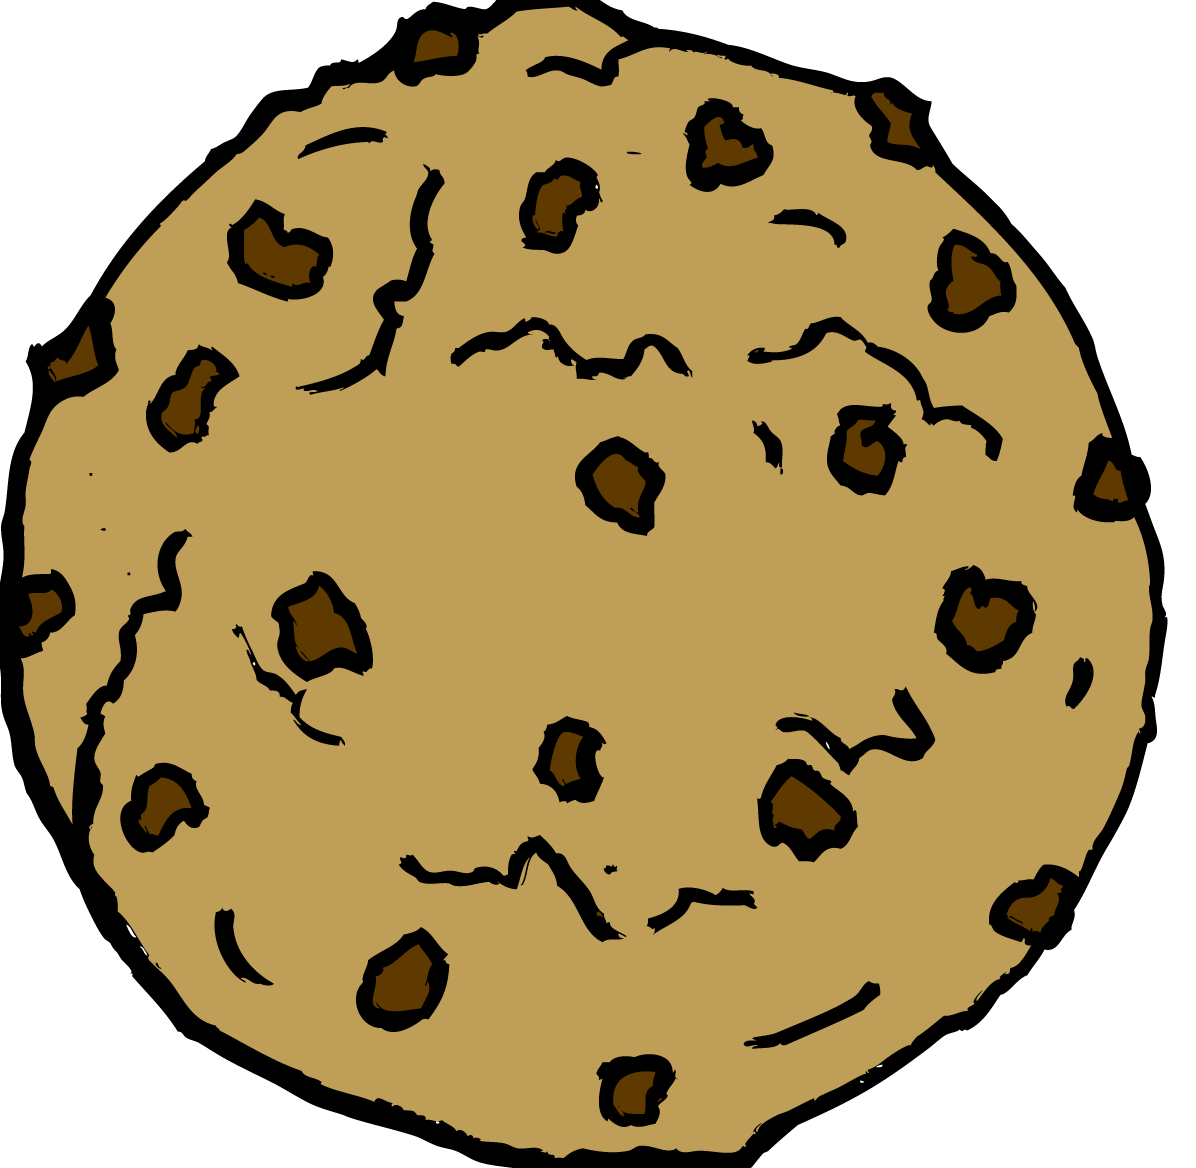 Cartoon Chocolate Chip Cookie